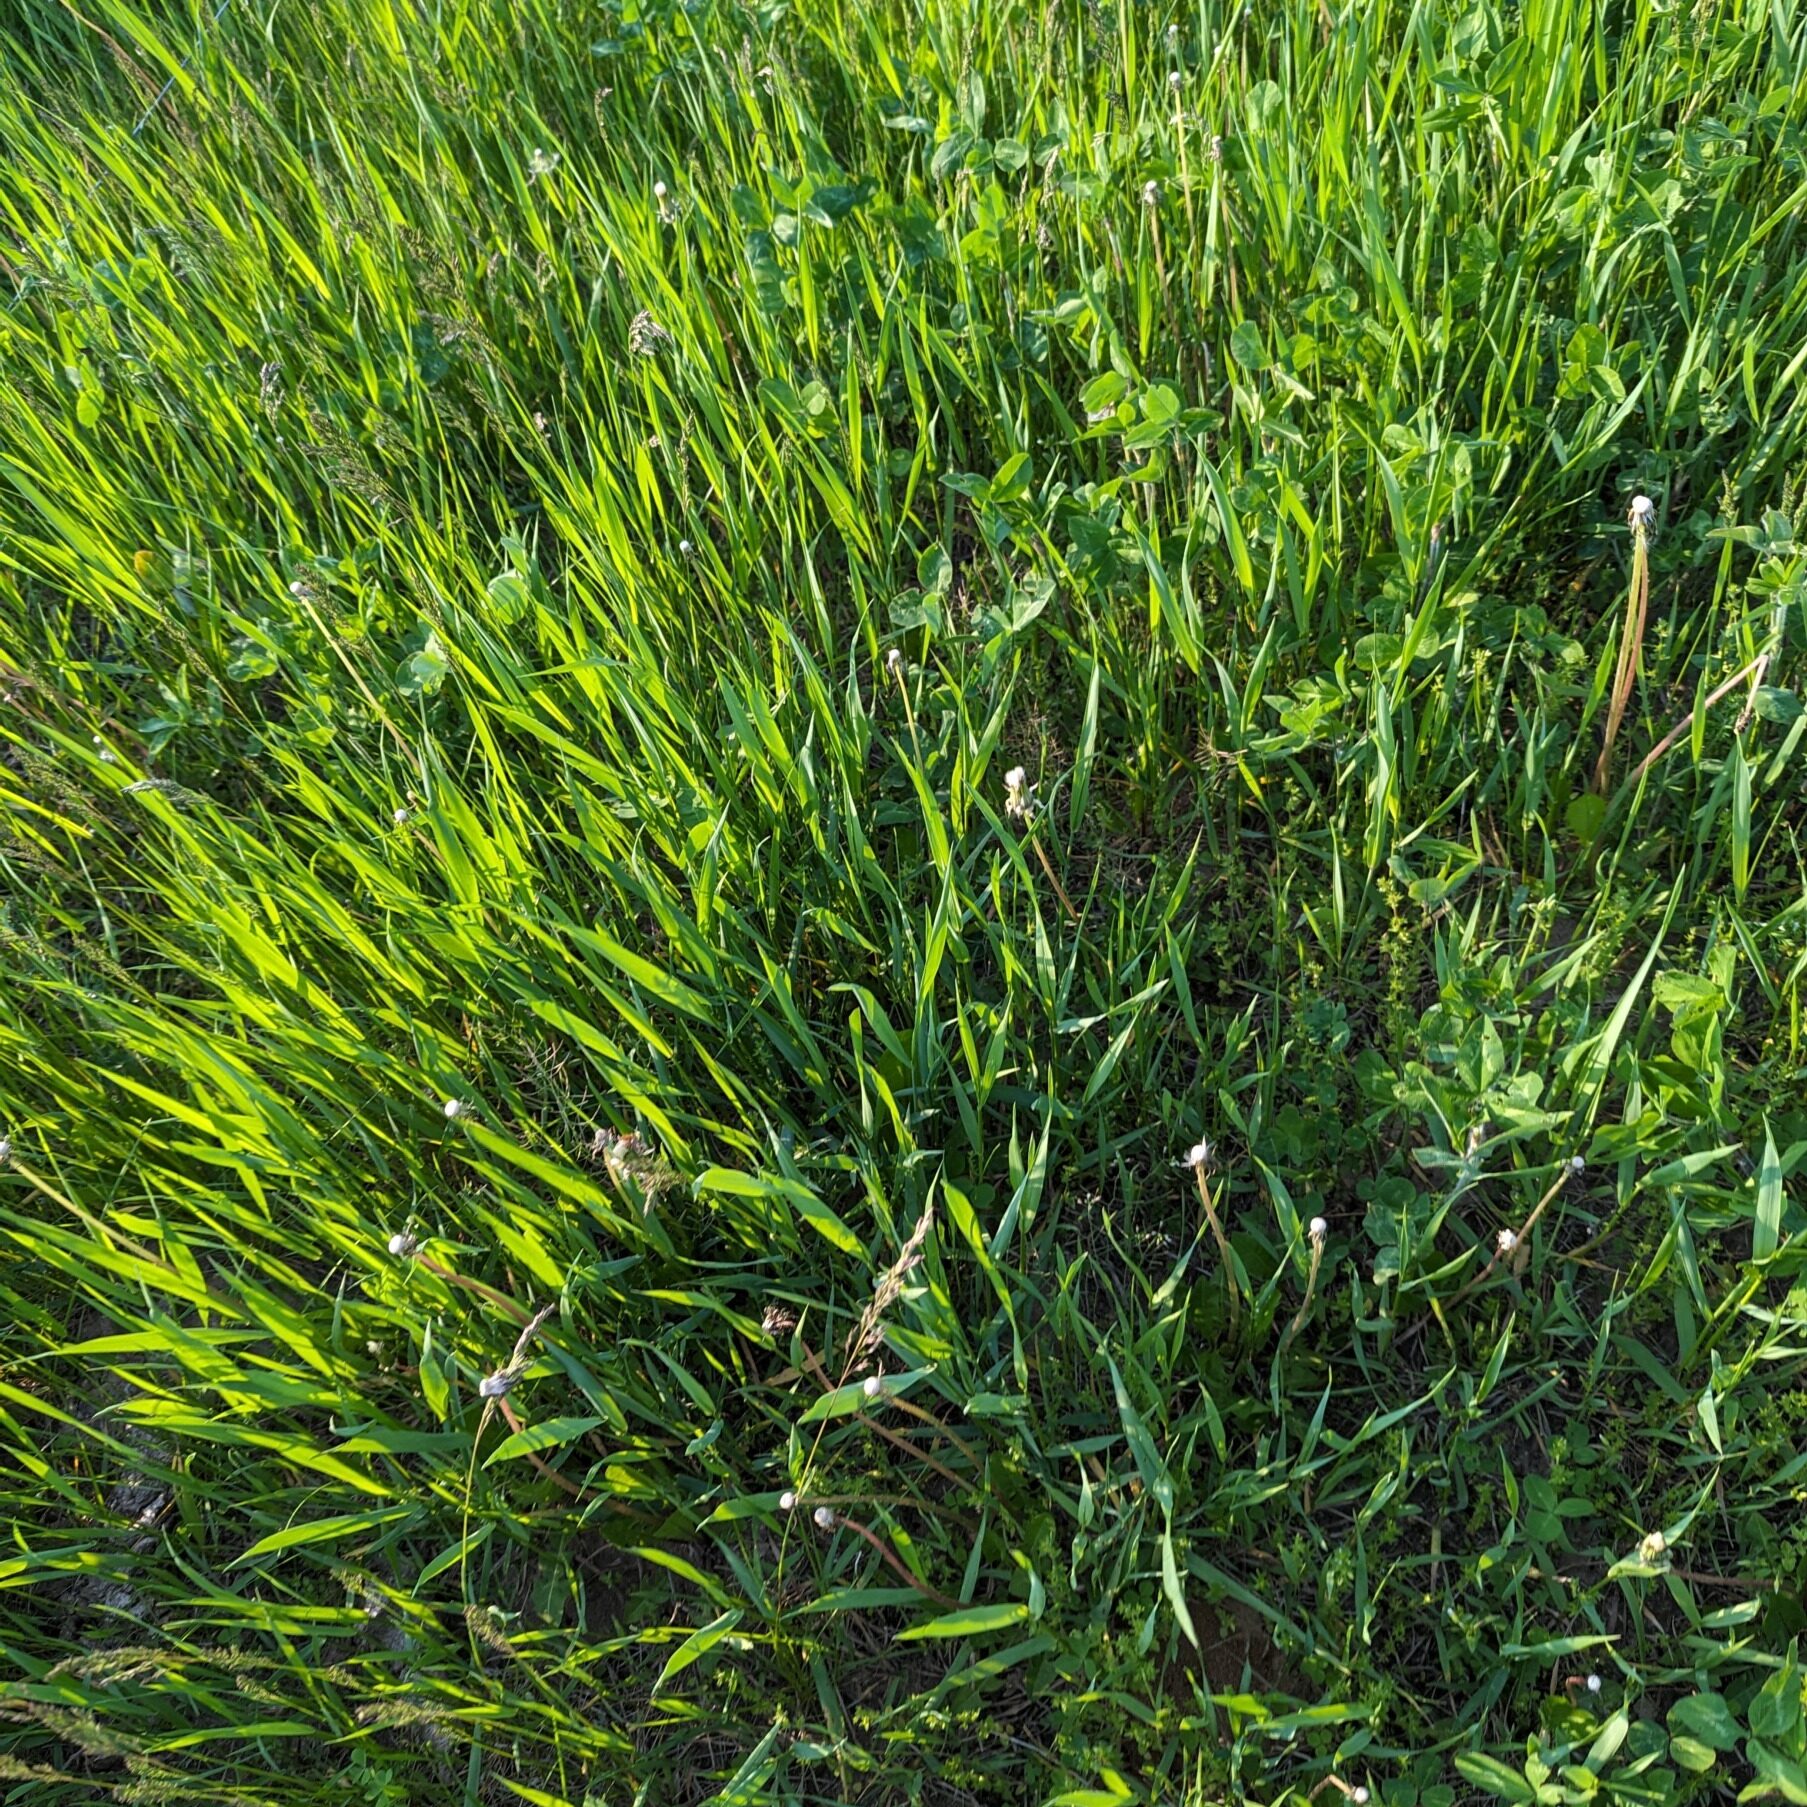 Pasture grass